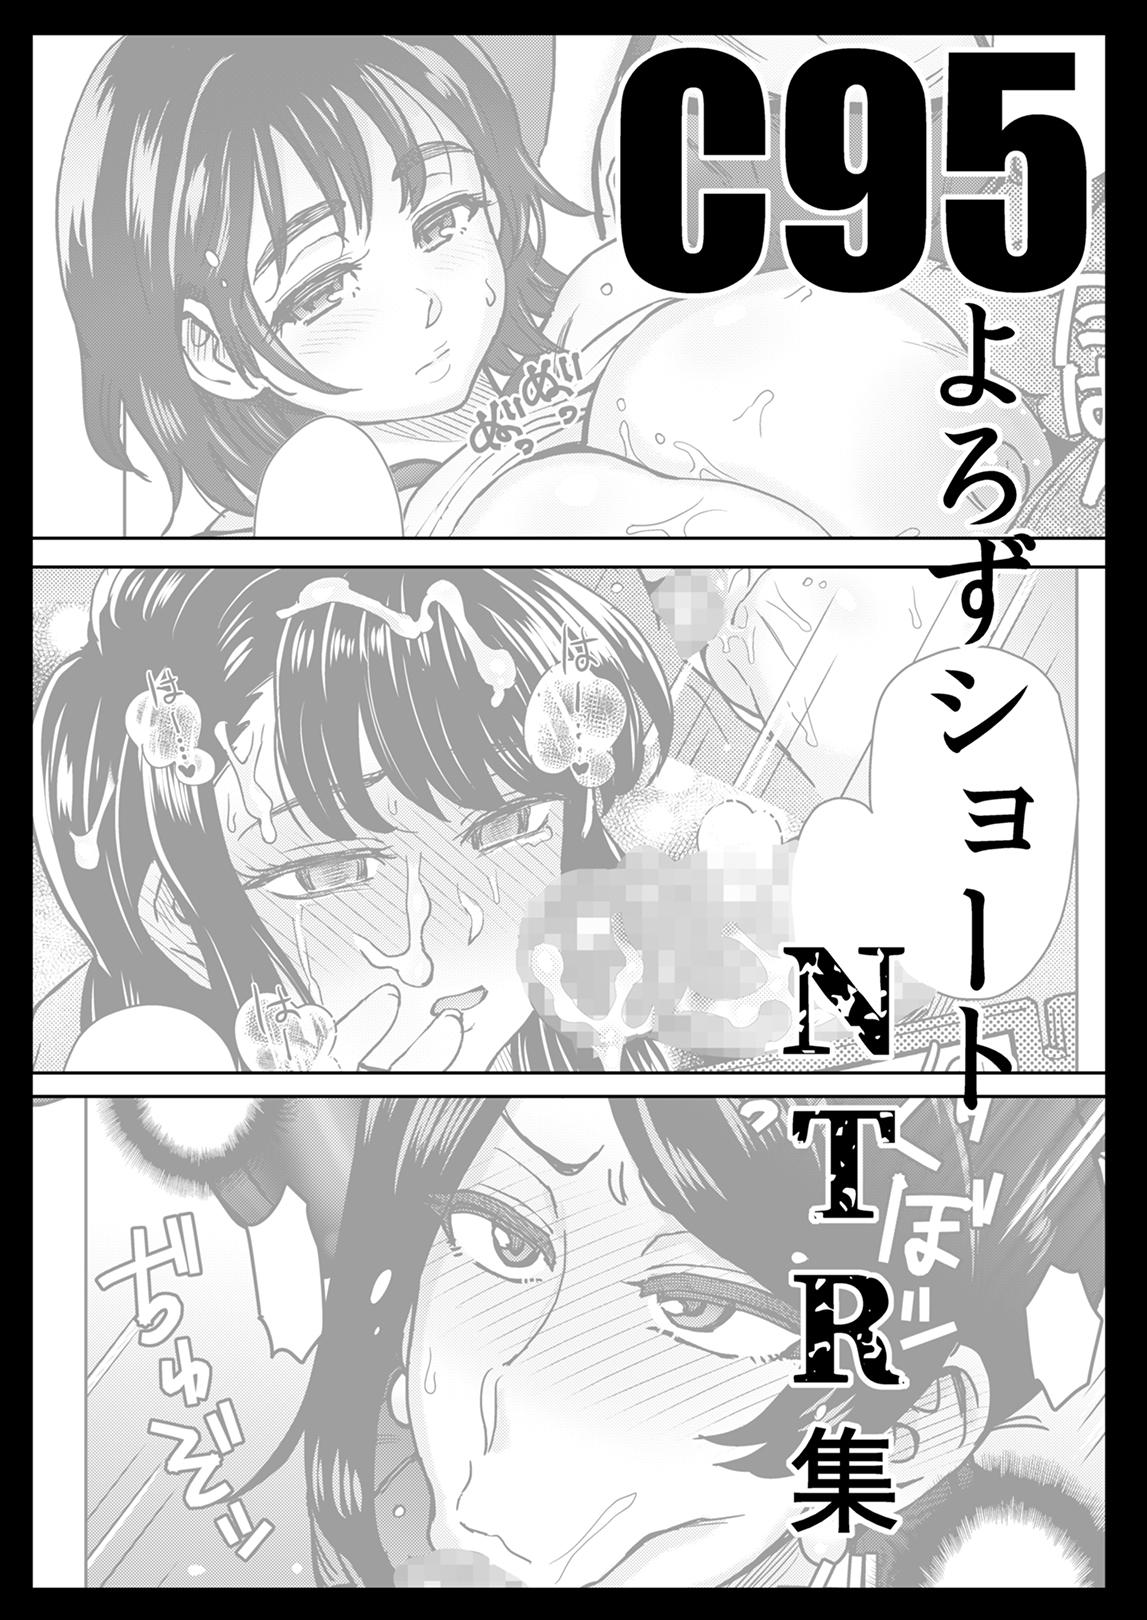 C95 Yorozu NTR Short Manga Shuu 1